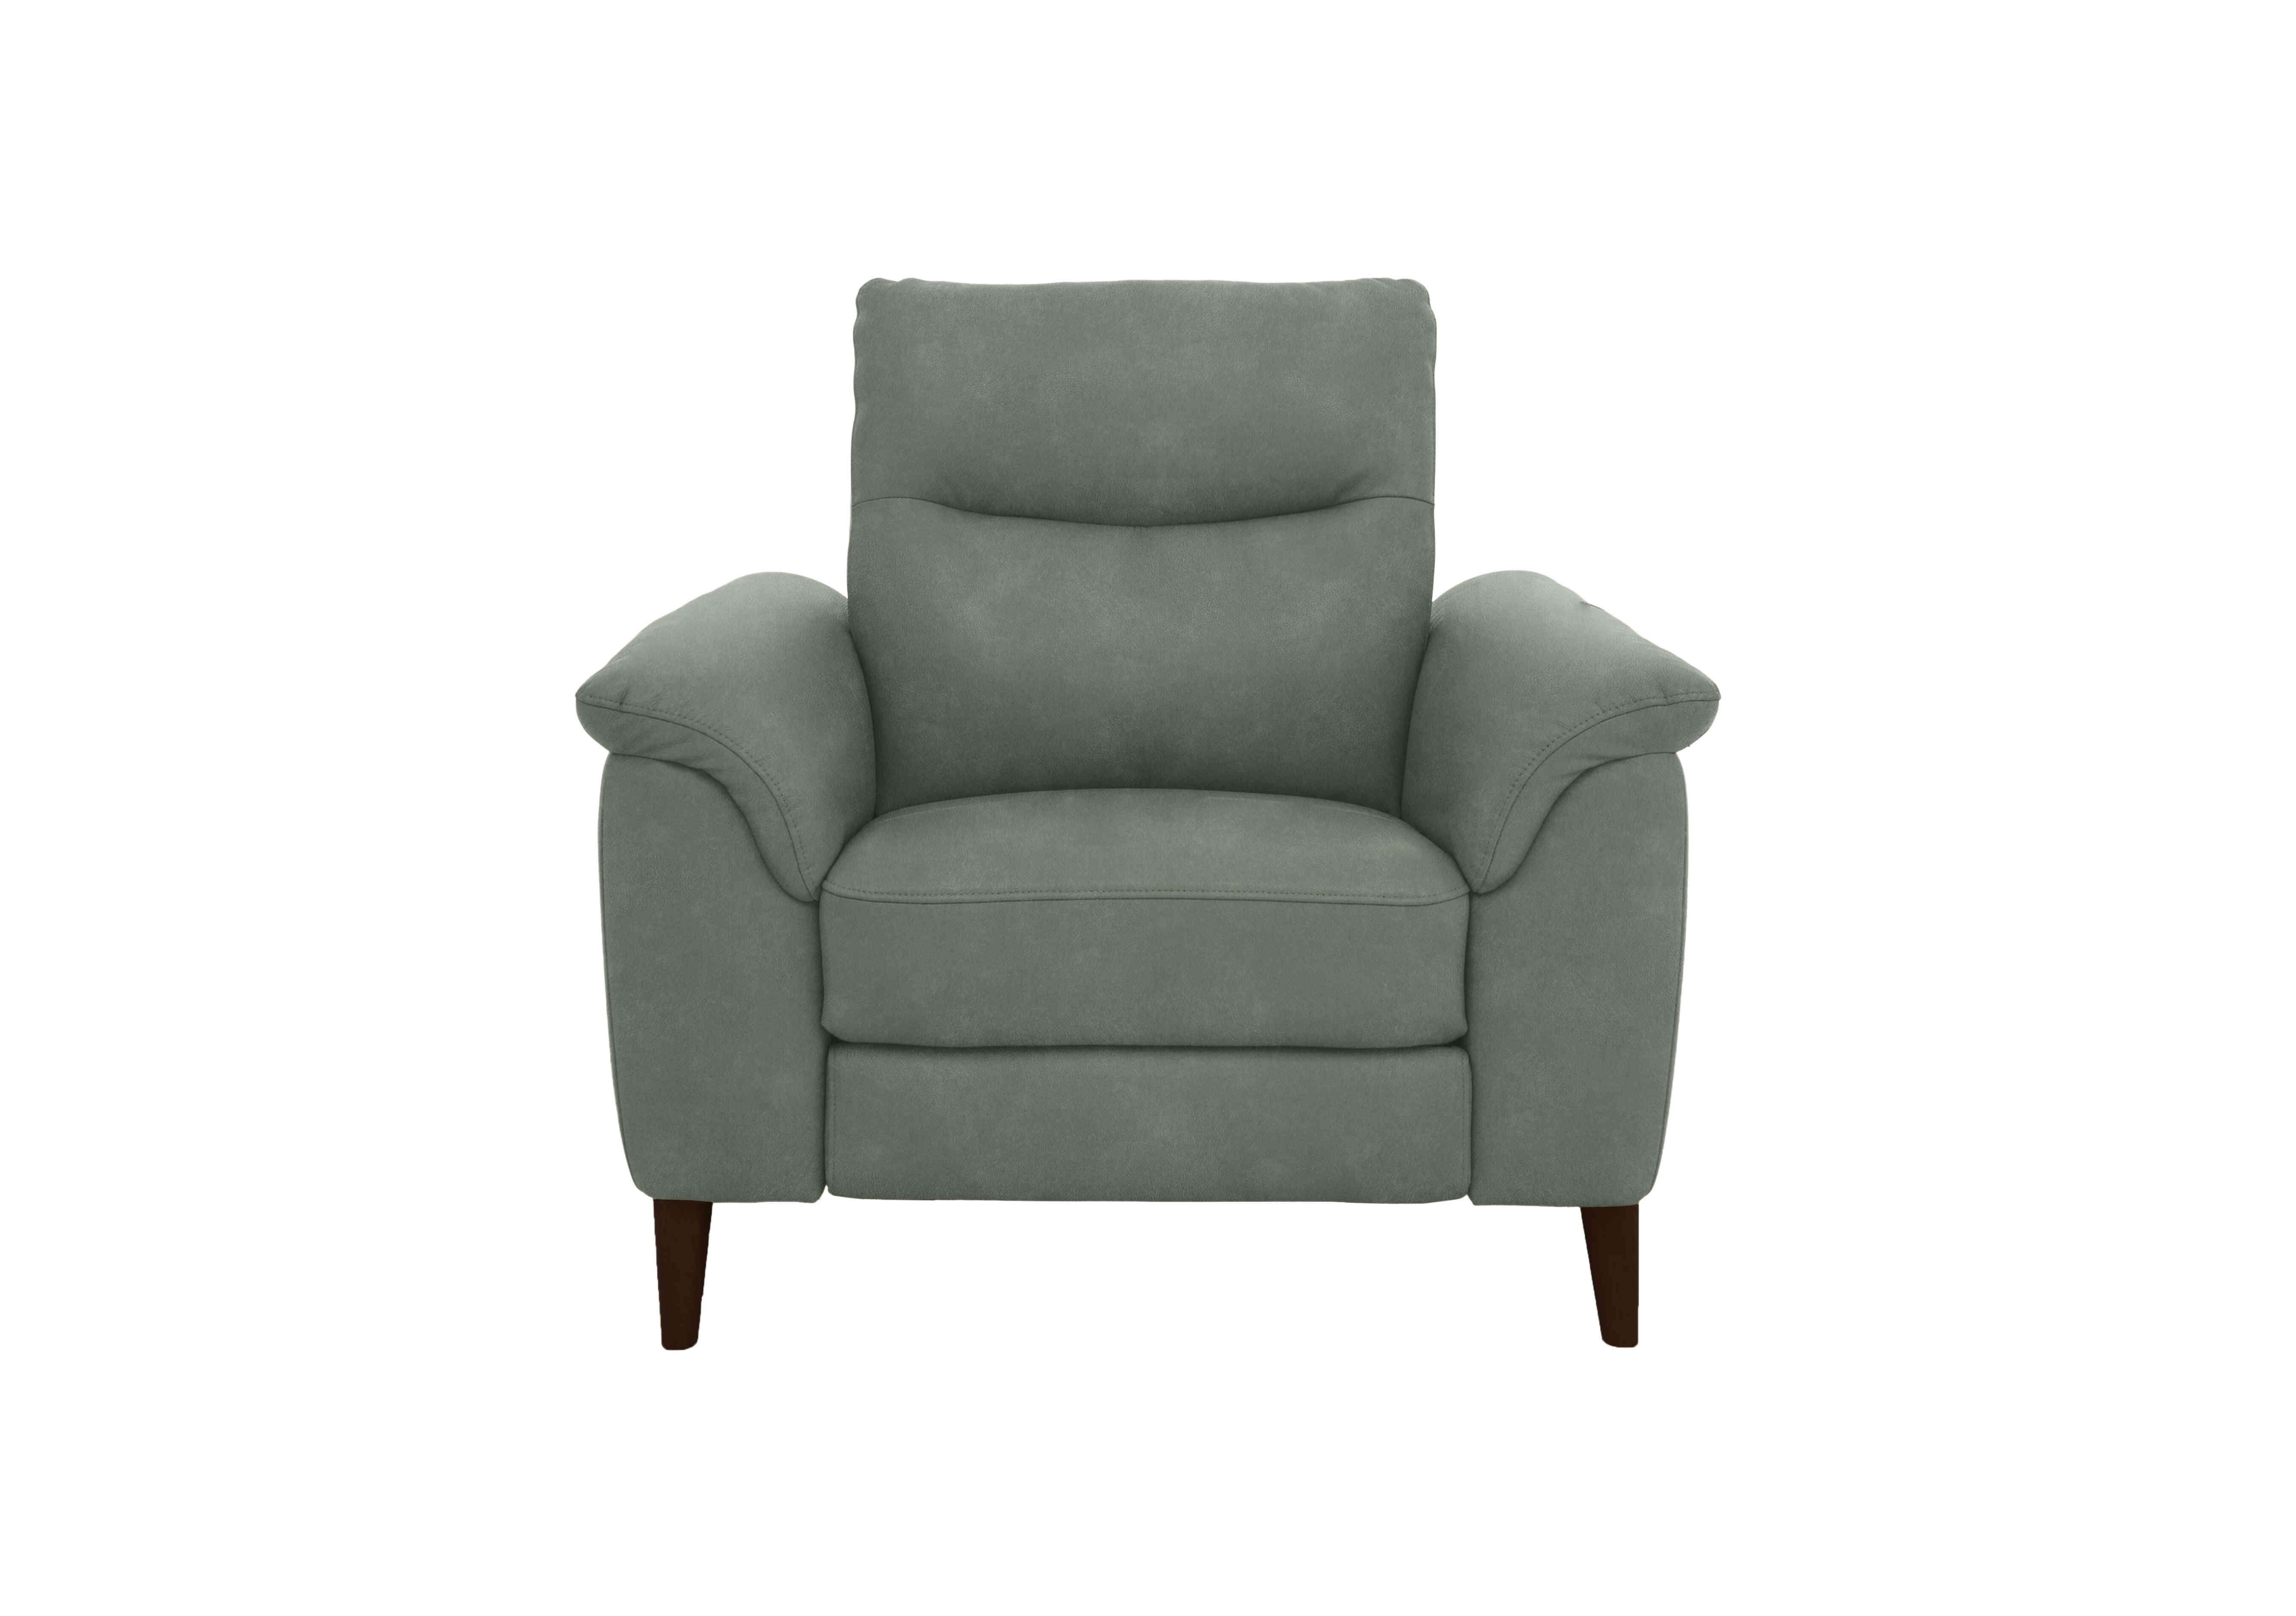 Morgan Fabric Armchair in Fern Dexter 14 43514 on Furniture Village